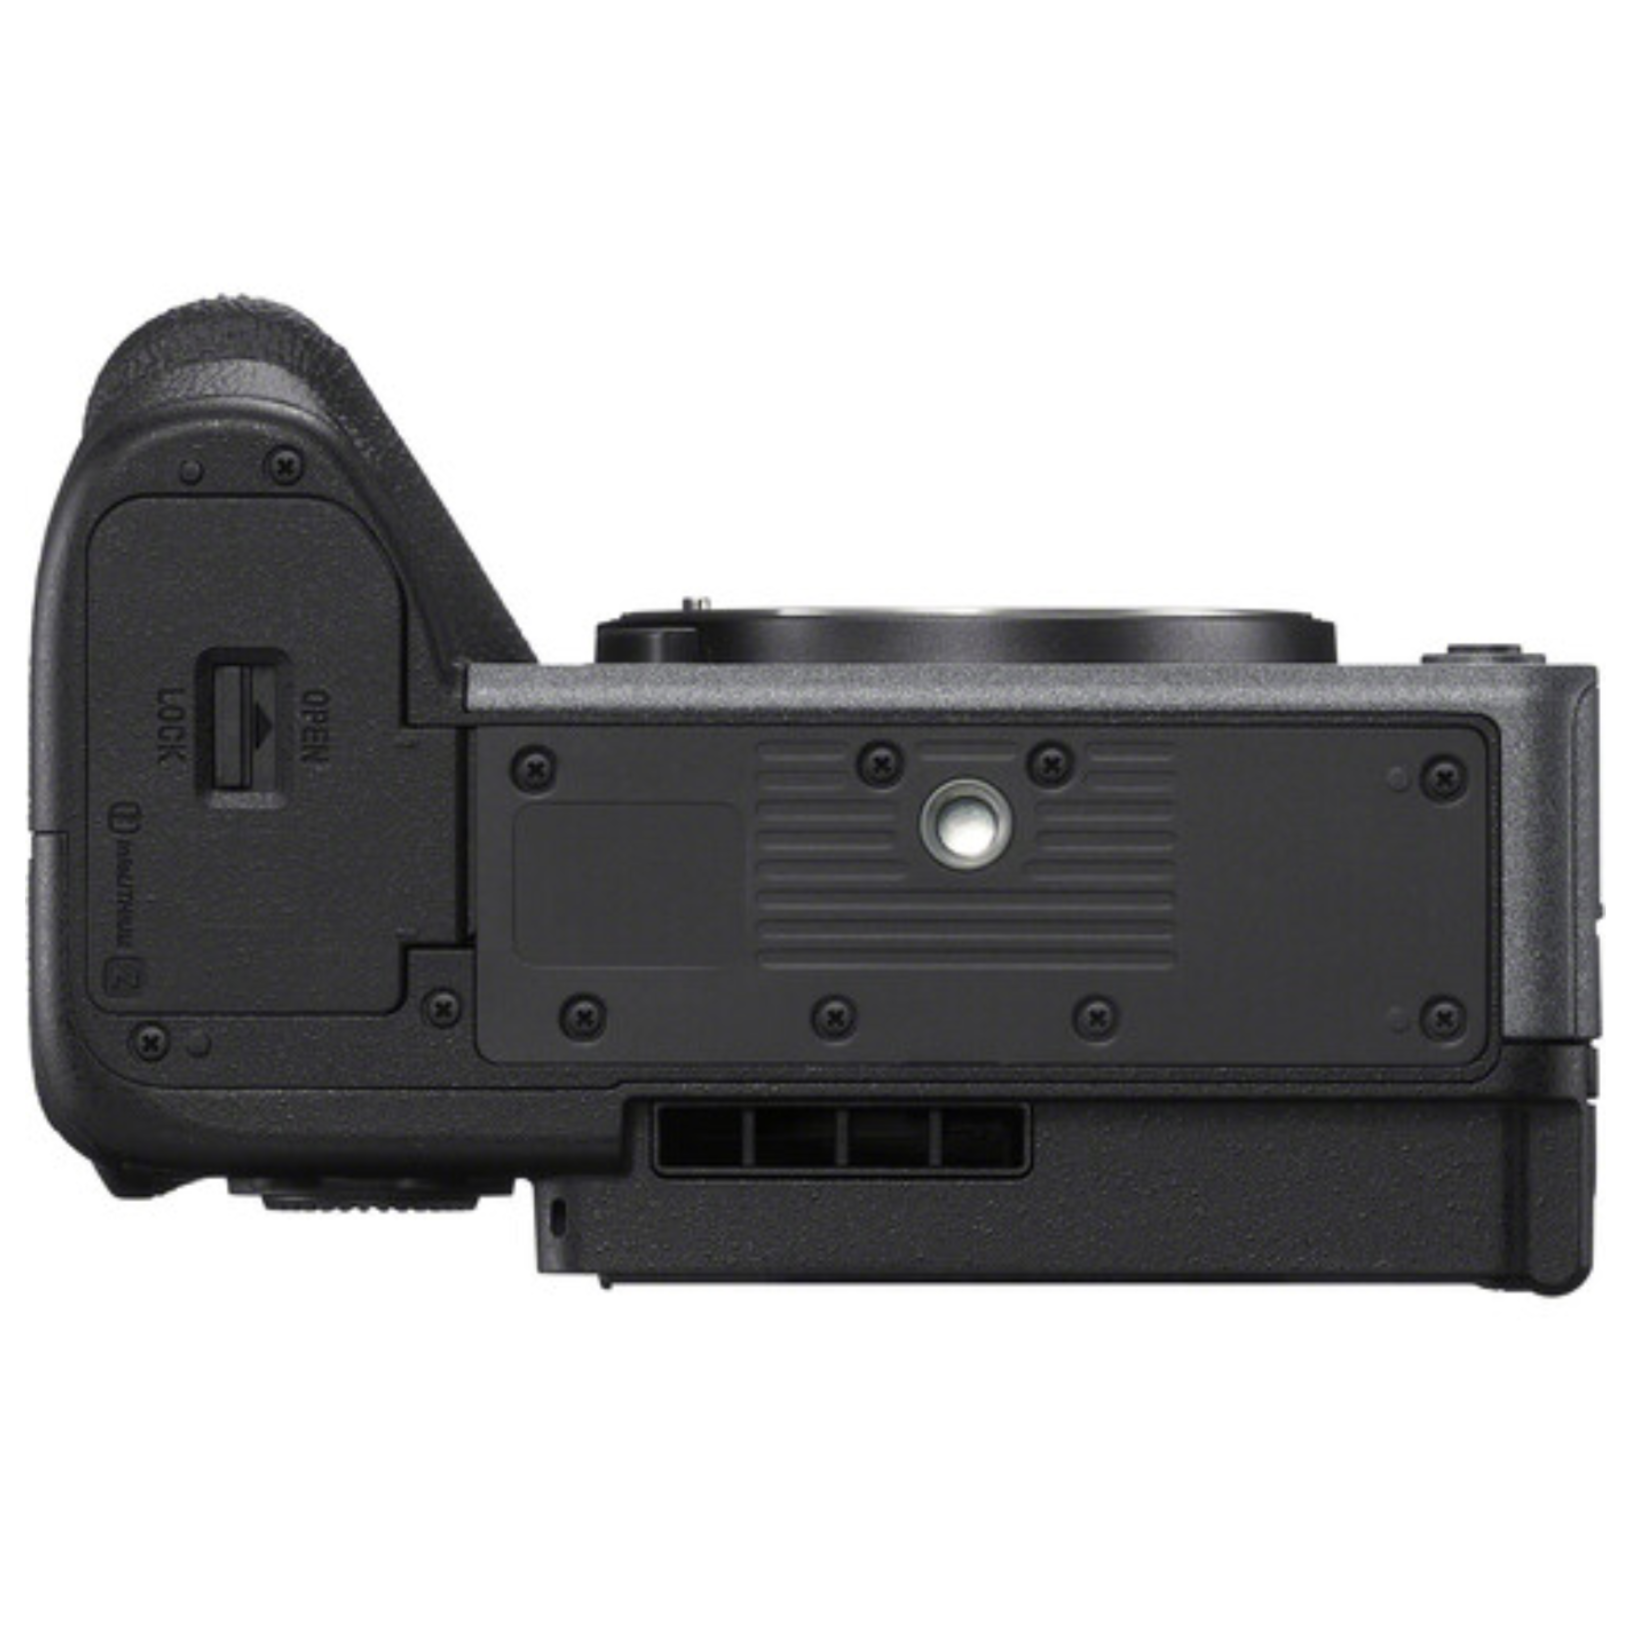 Sony Sony FX30 Digital Cinema Camera